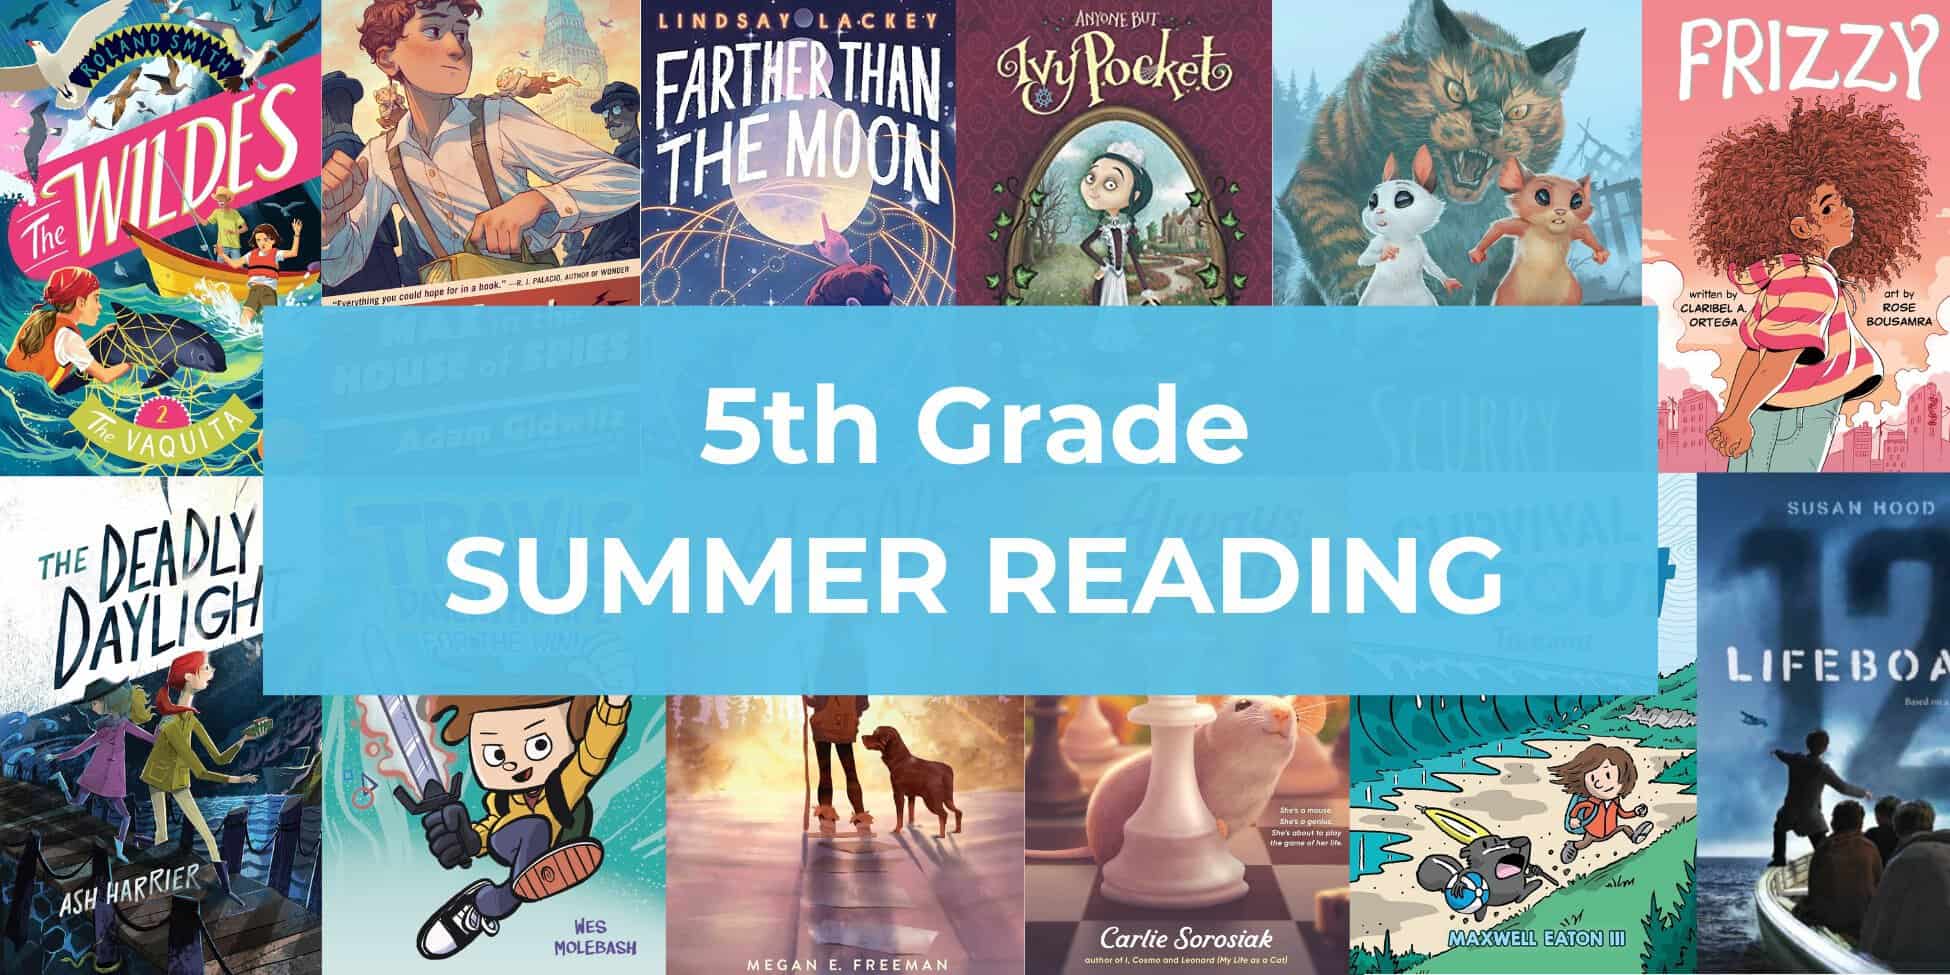 5th grade books for summer reading